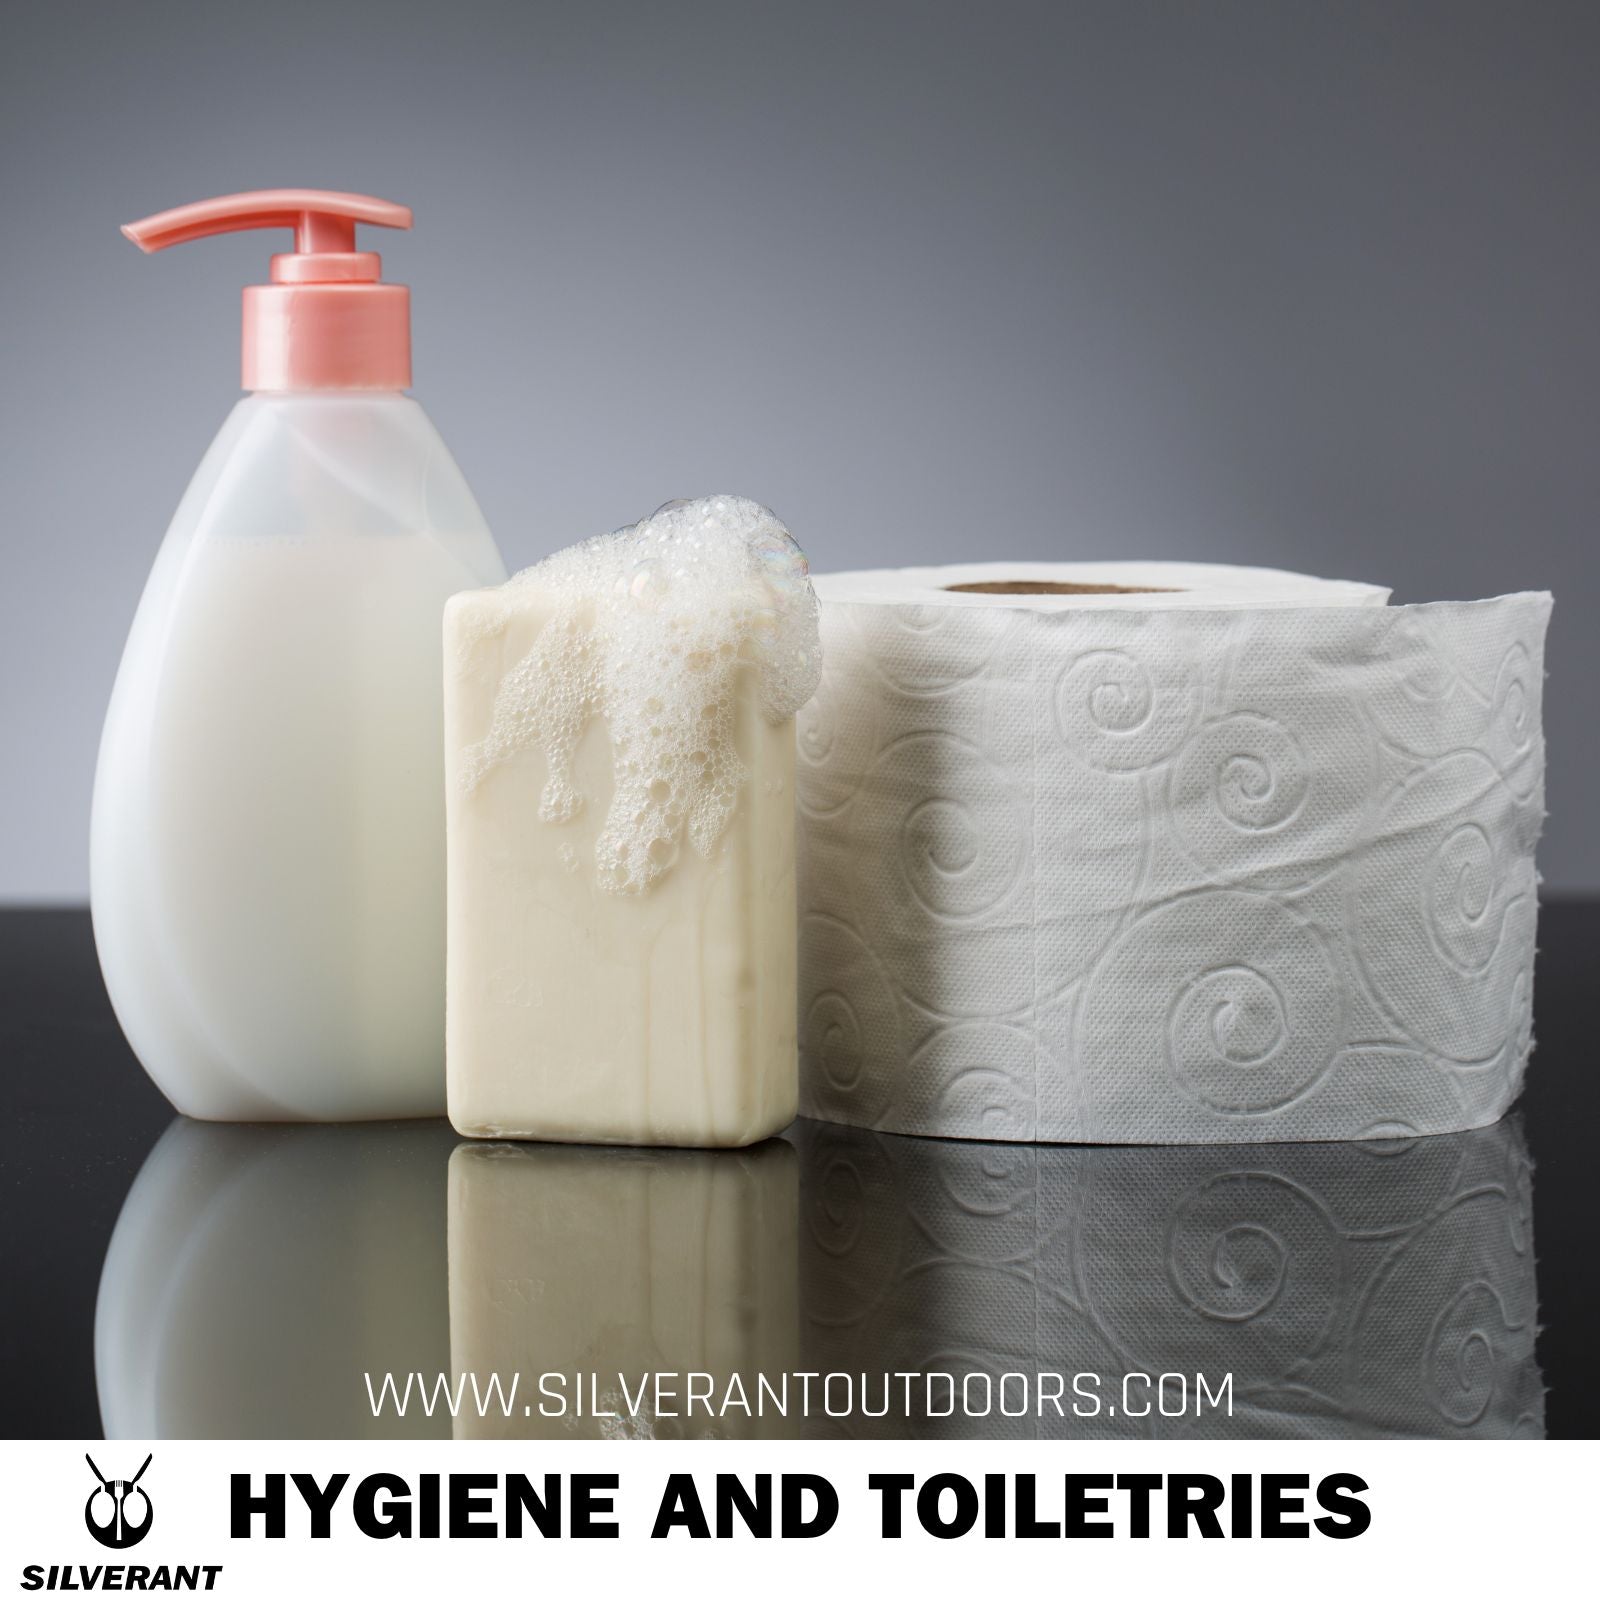 Hygiene and Toiletries